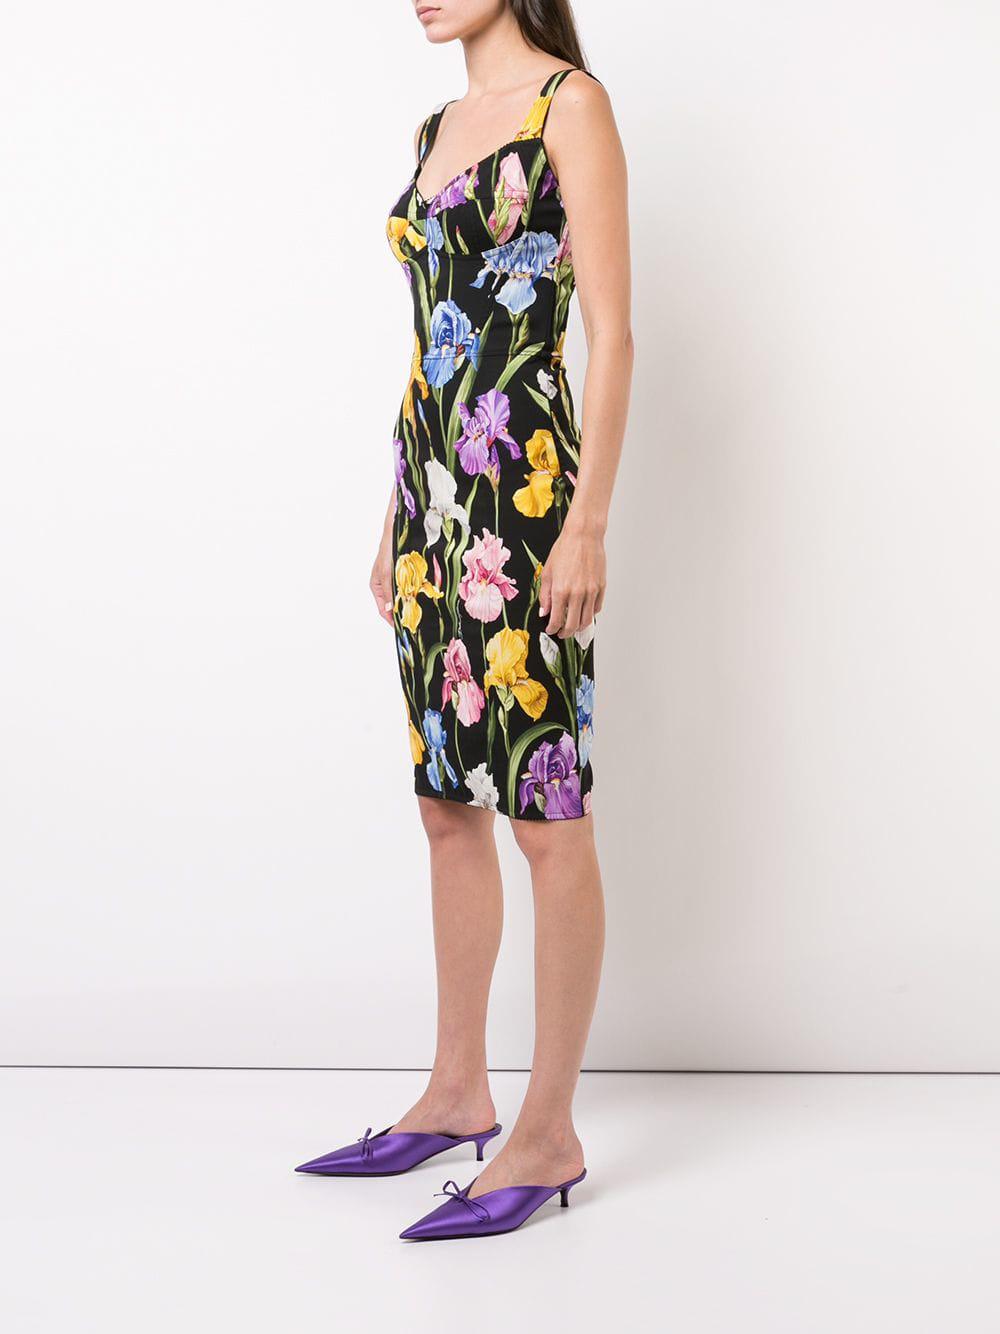 dolce gabbana iris dress